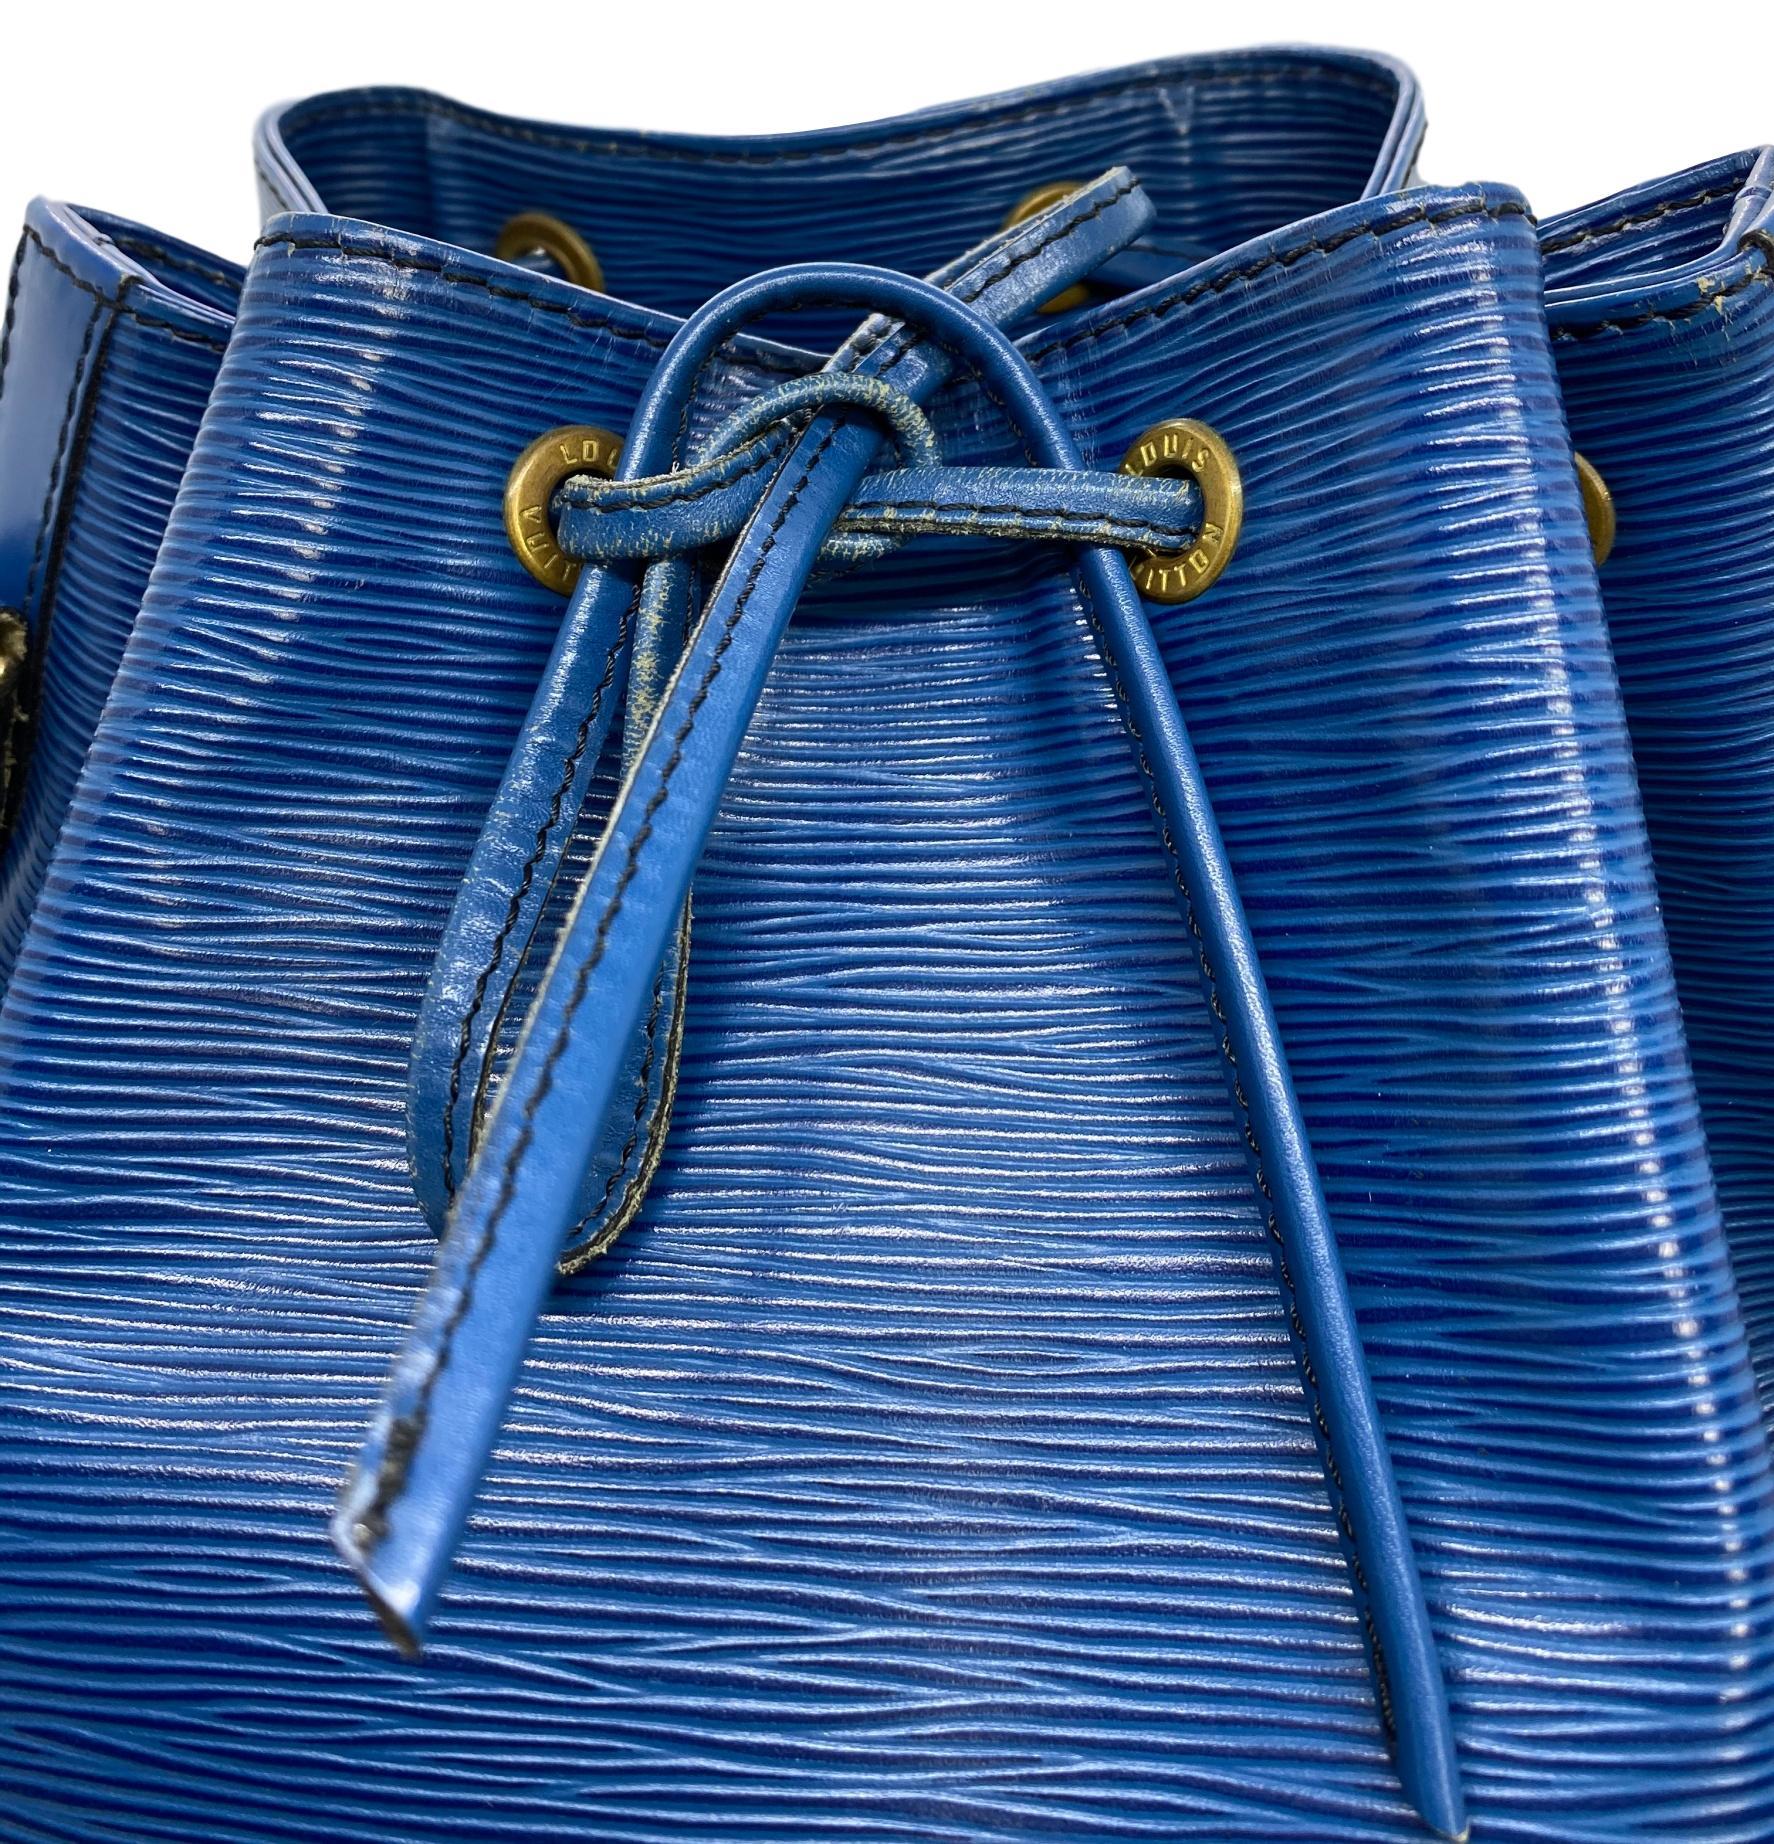 Louis Vuitton Noe PM Bucket Bag in Toledo Blue EPI Leather, France 1995. 1